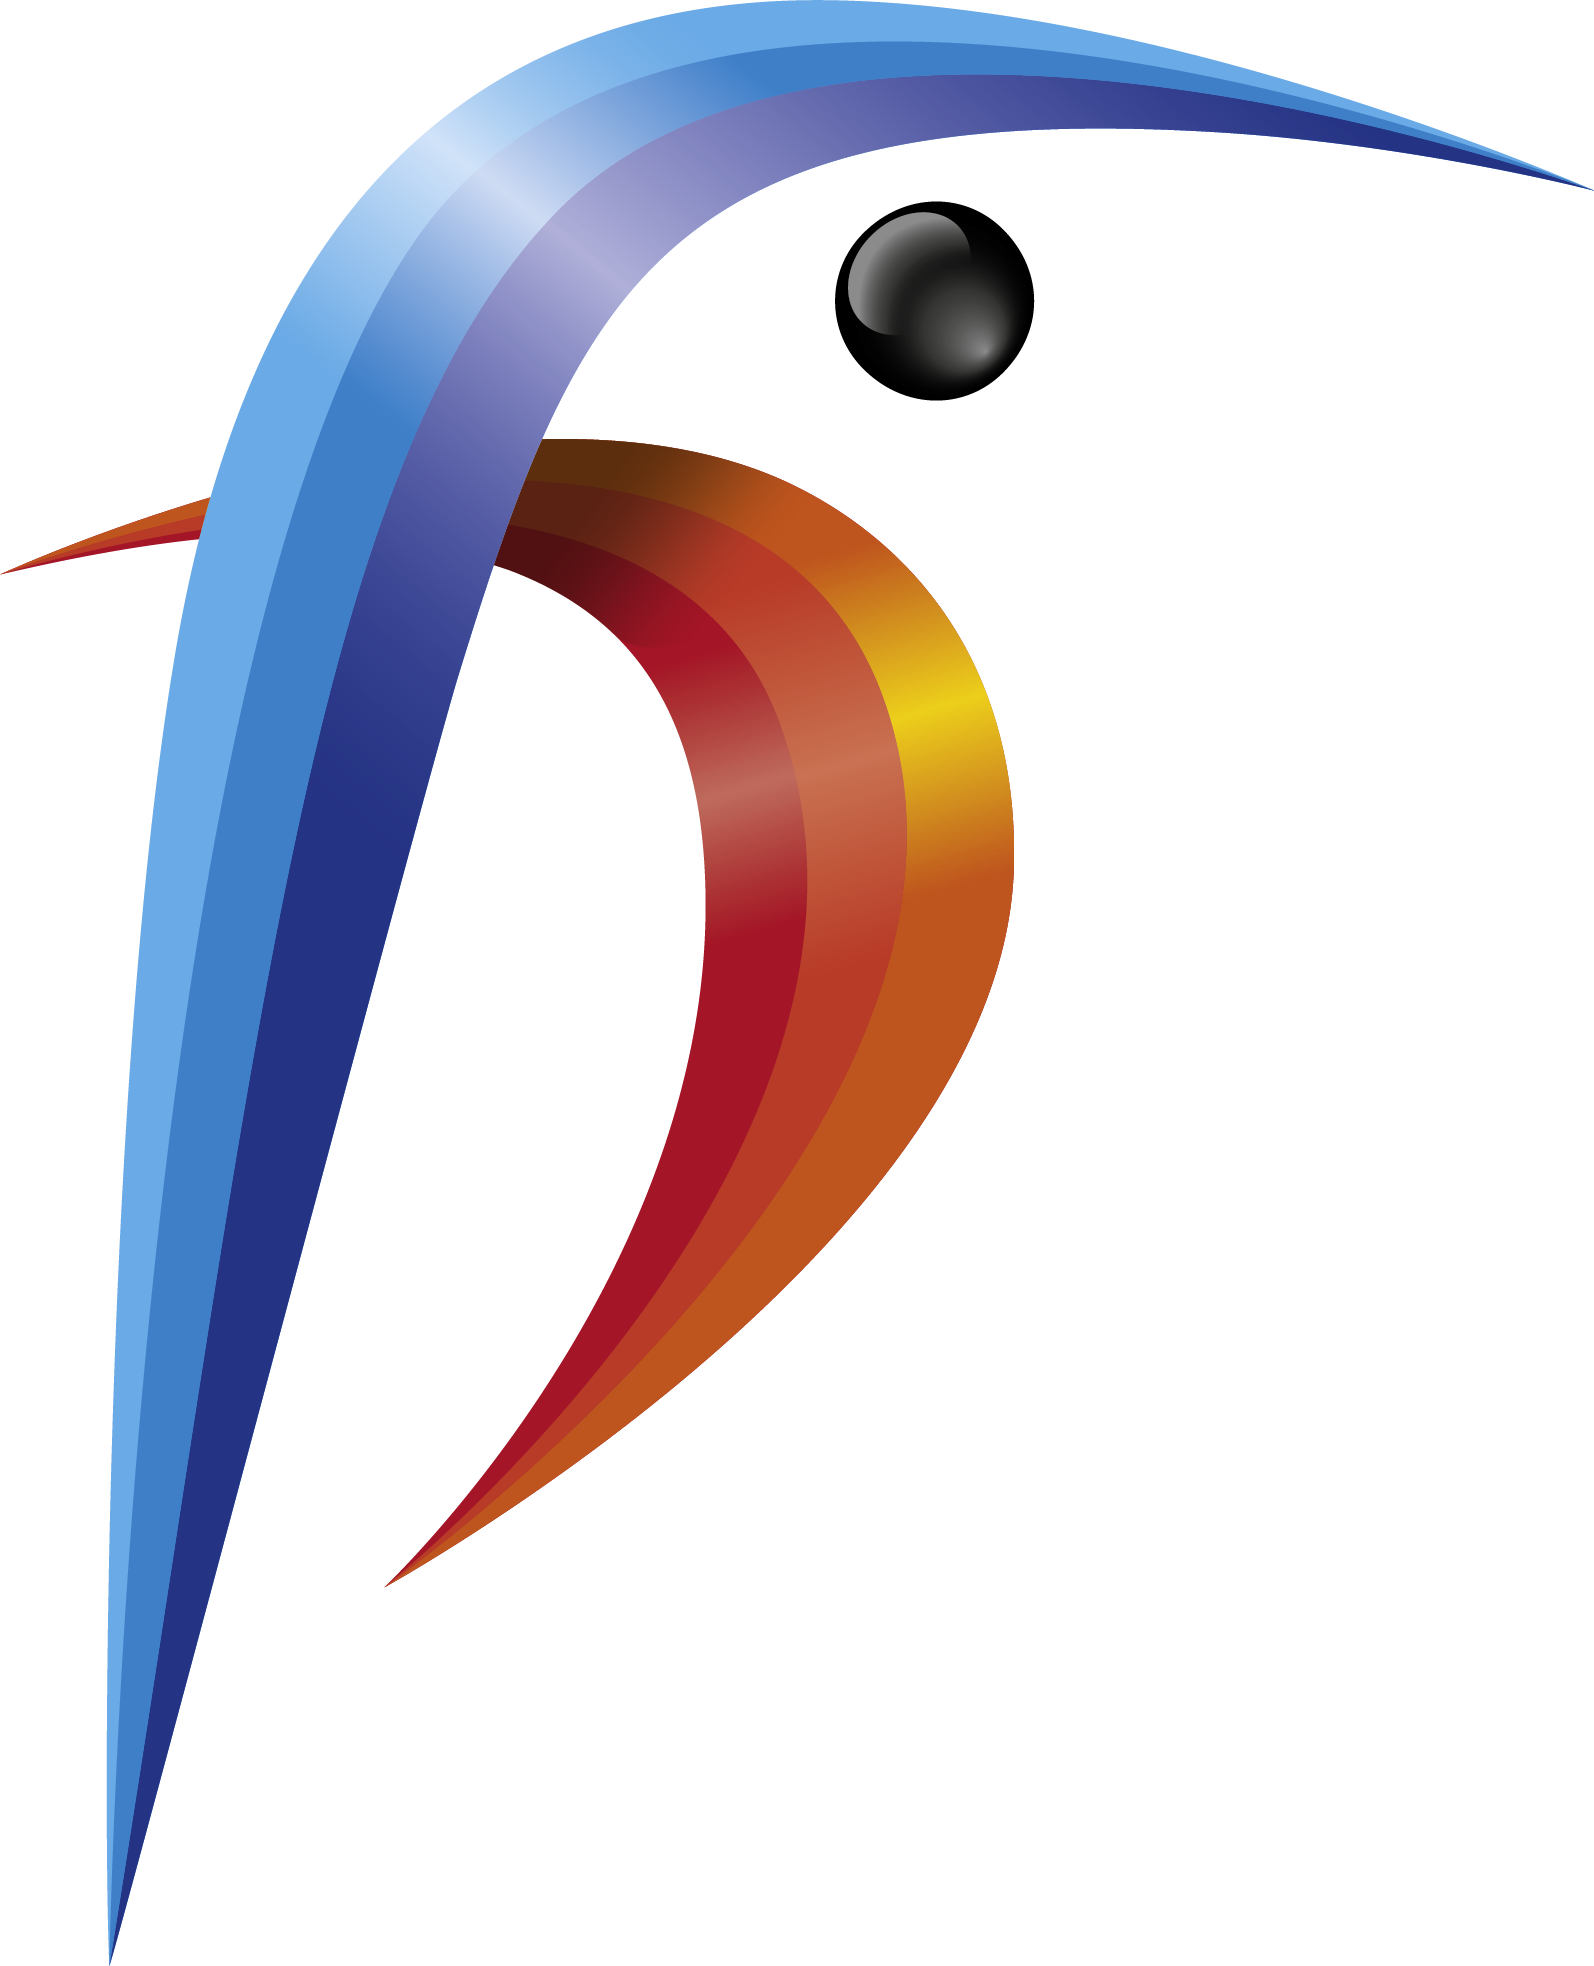 Kingfisher logo (transparent PNG)